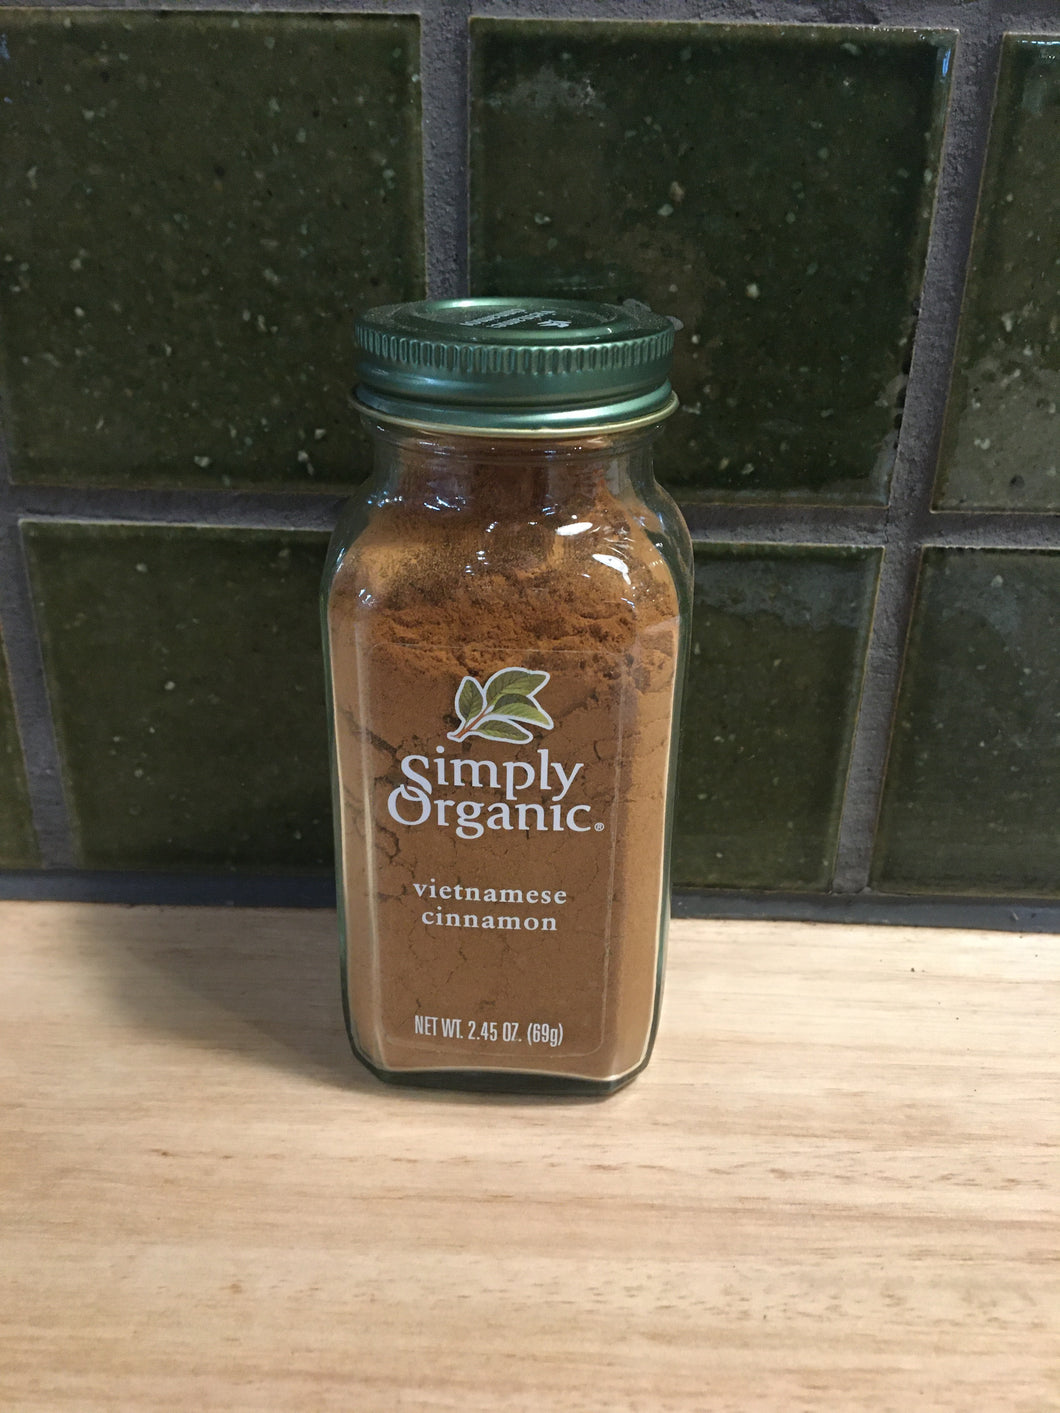 Simply Organic Cinnamon Vietnamese 69g